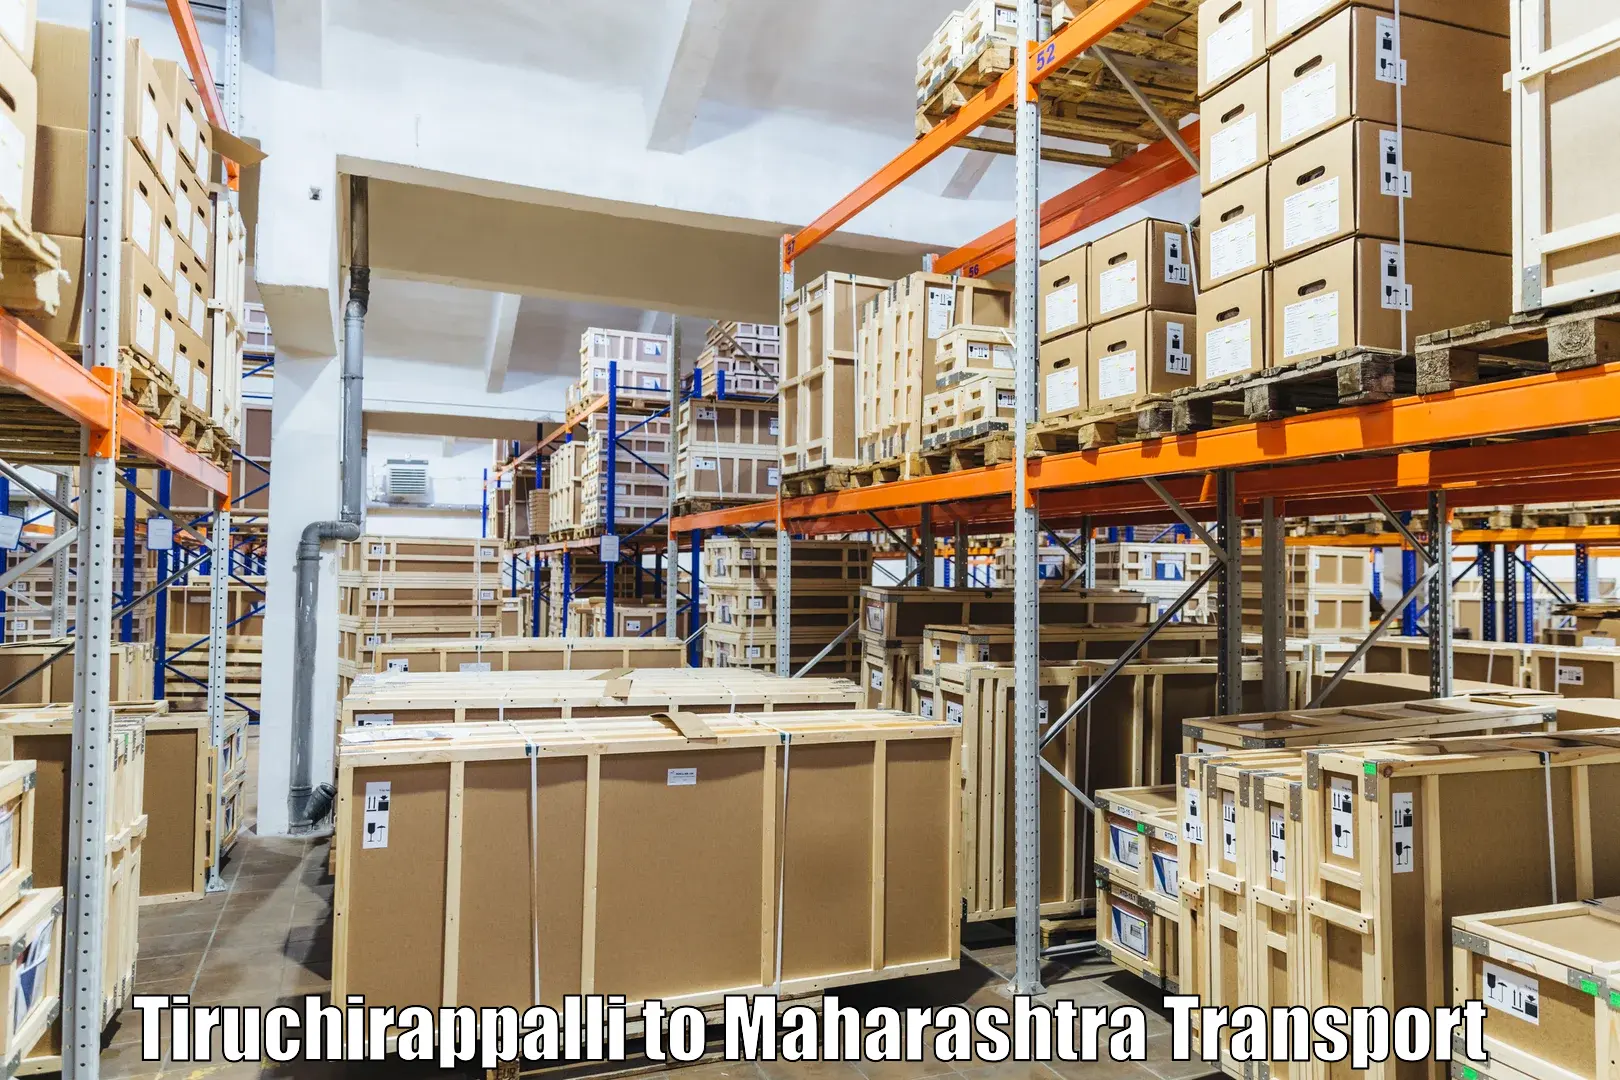 Delivery service Tiruchirappalli to Pune